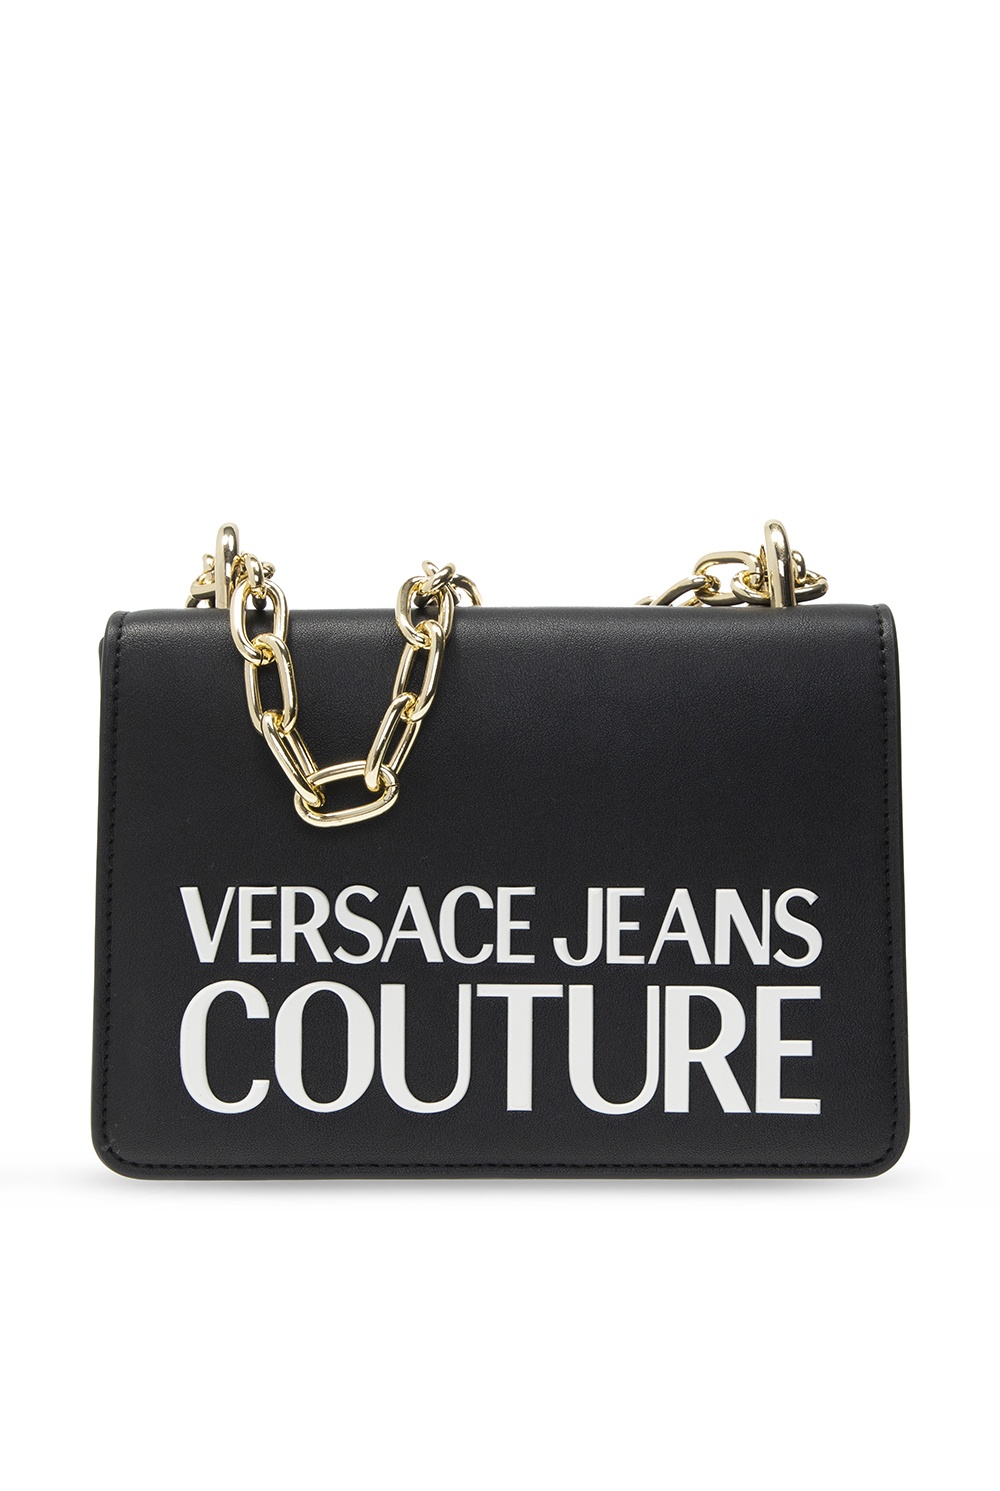 versace jeans couture shoulder bag